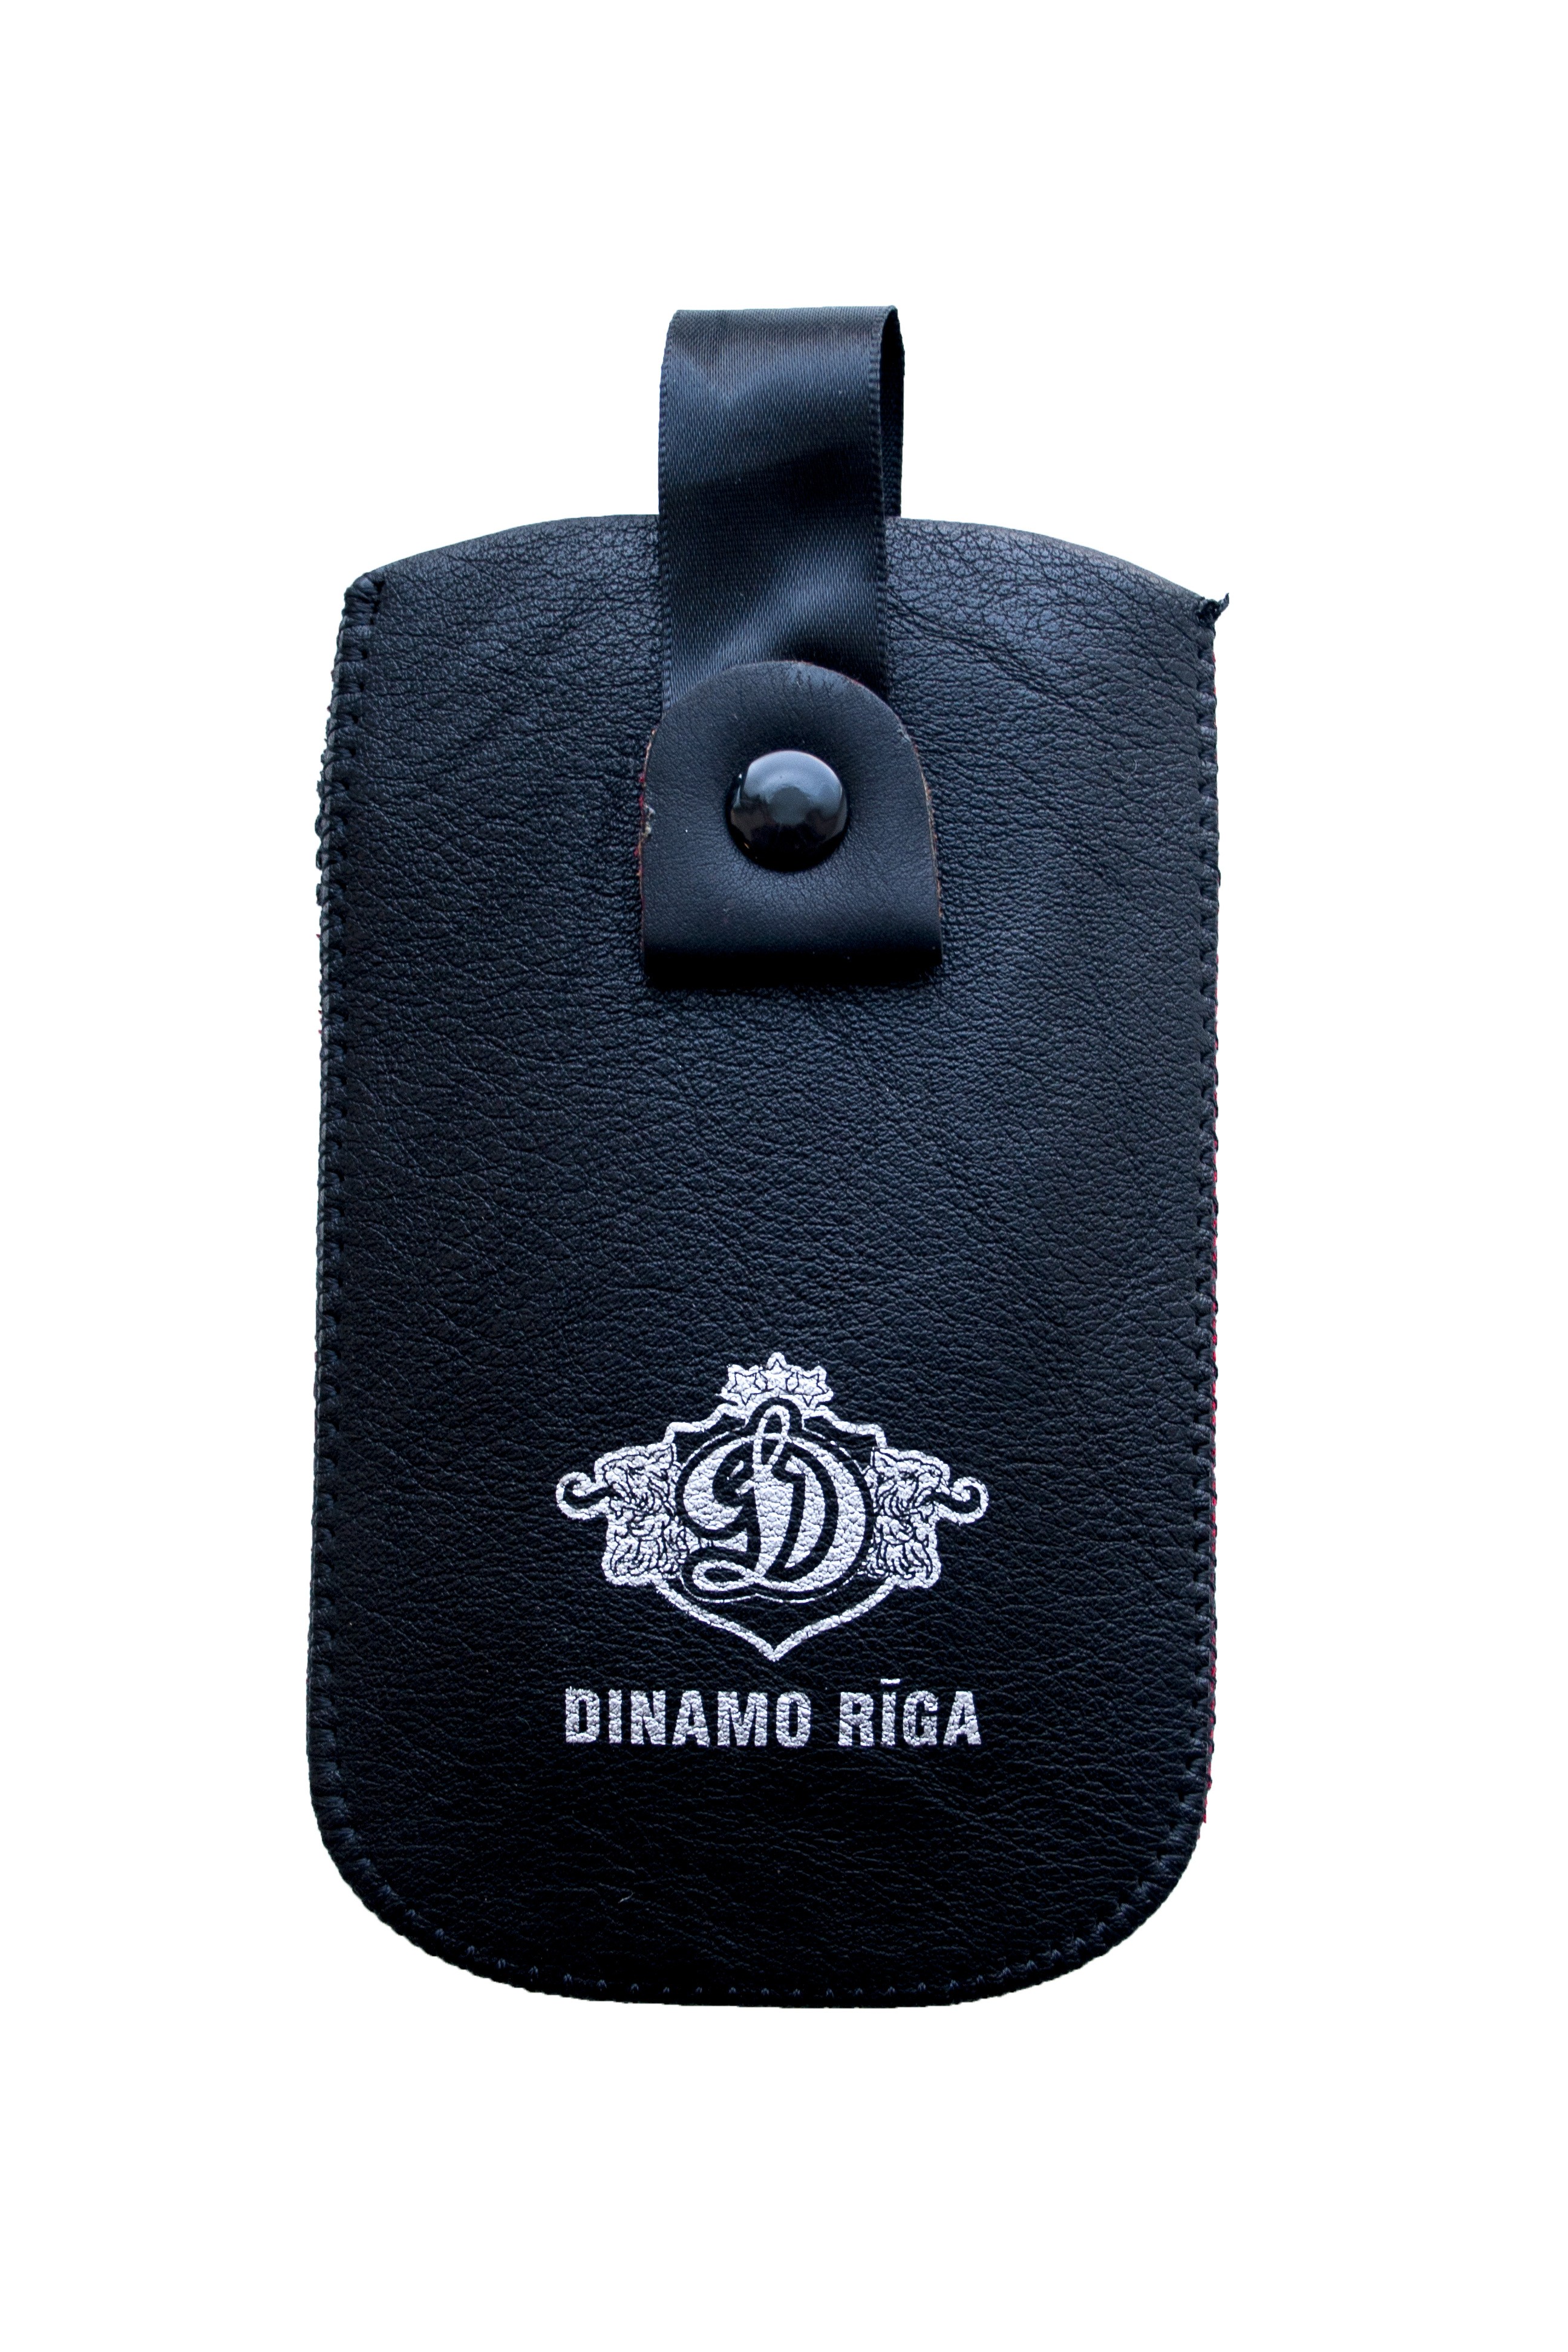 Dinamo Riga Telefona Maciņš